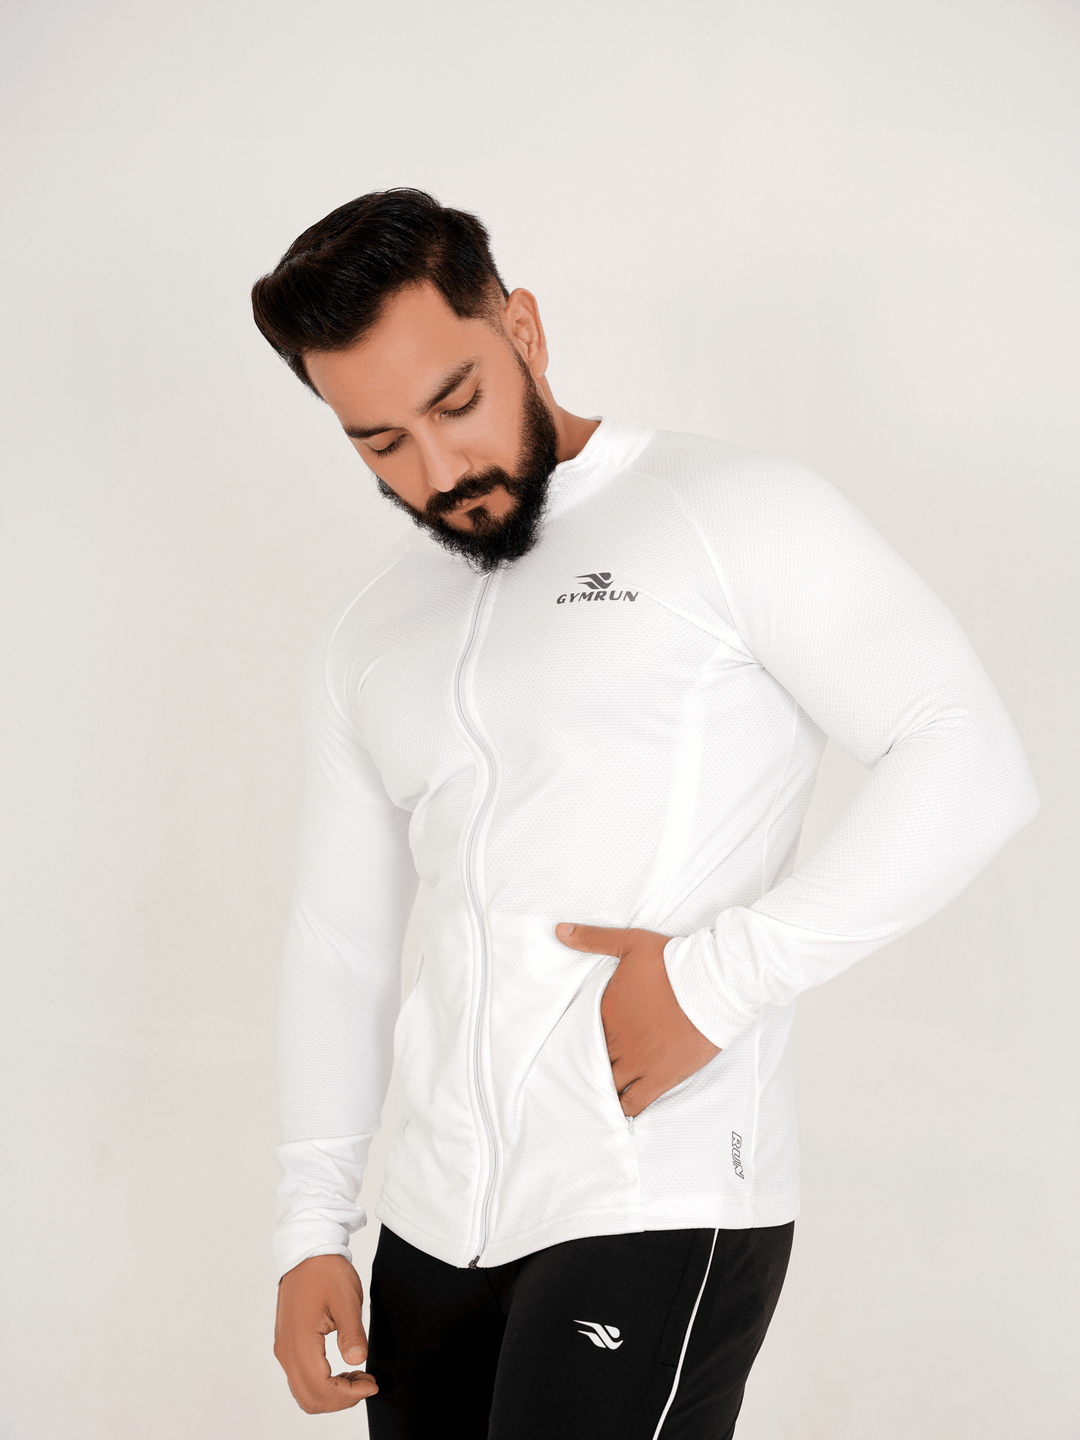 FlexFit Urban Jacket - White - GYMRUN Activewear